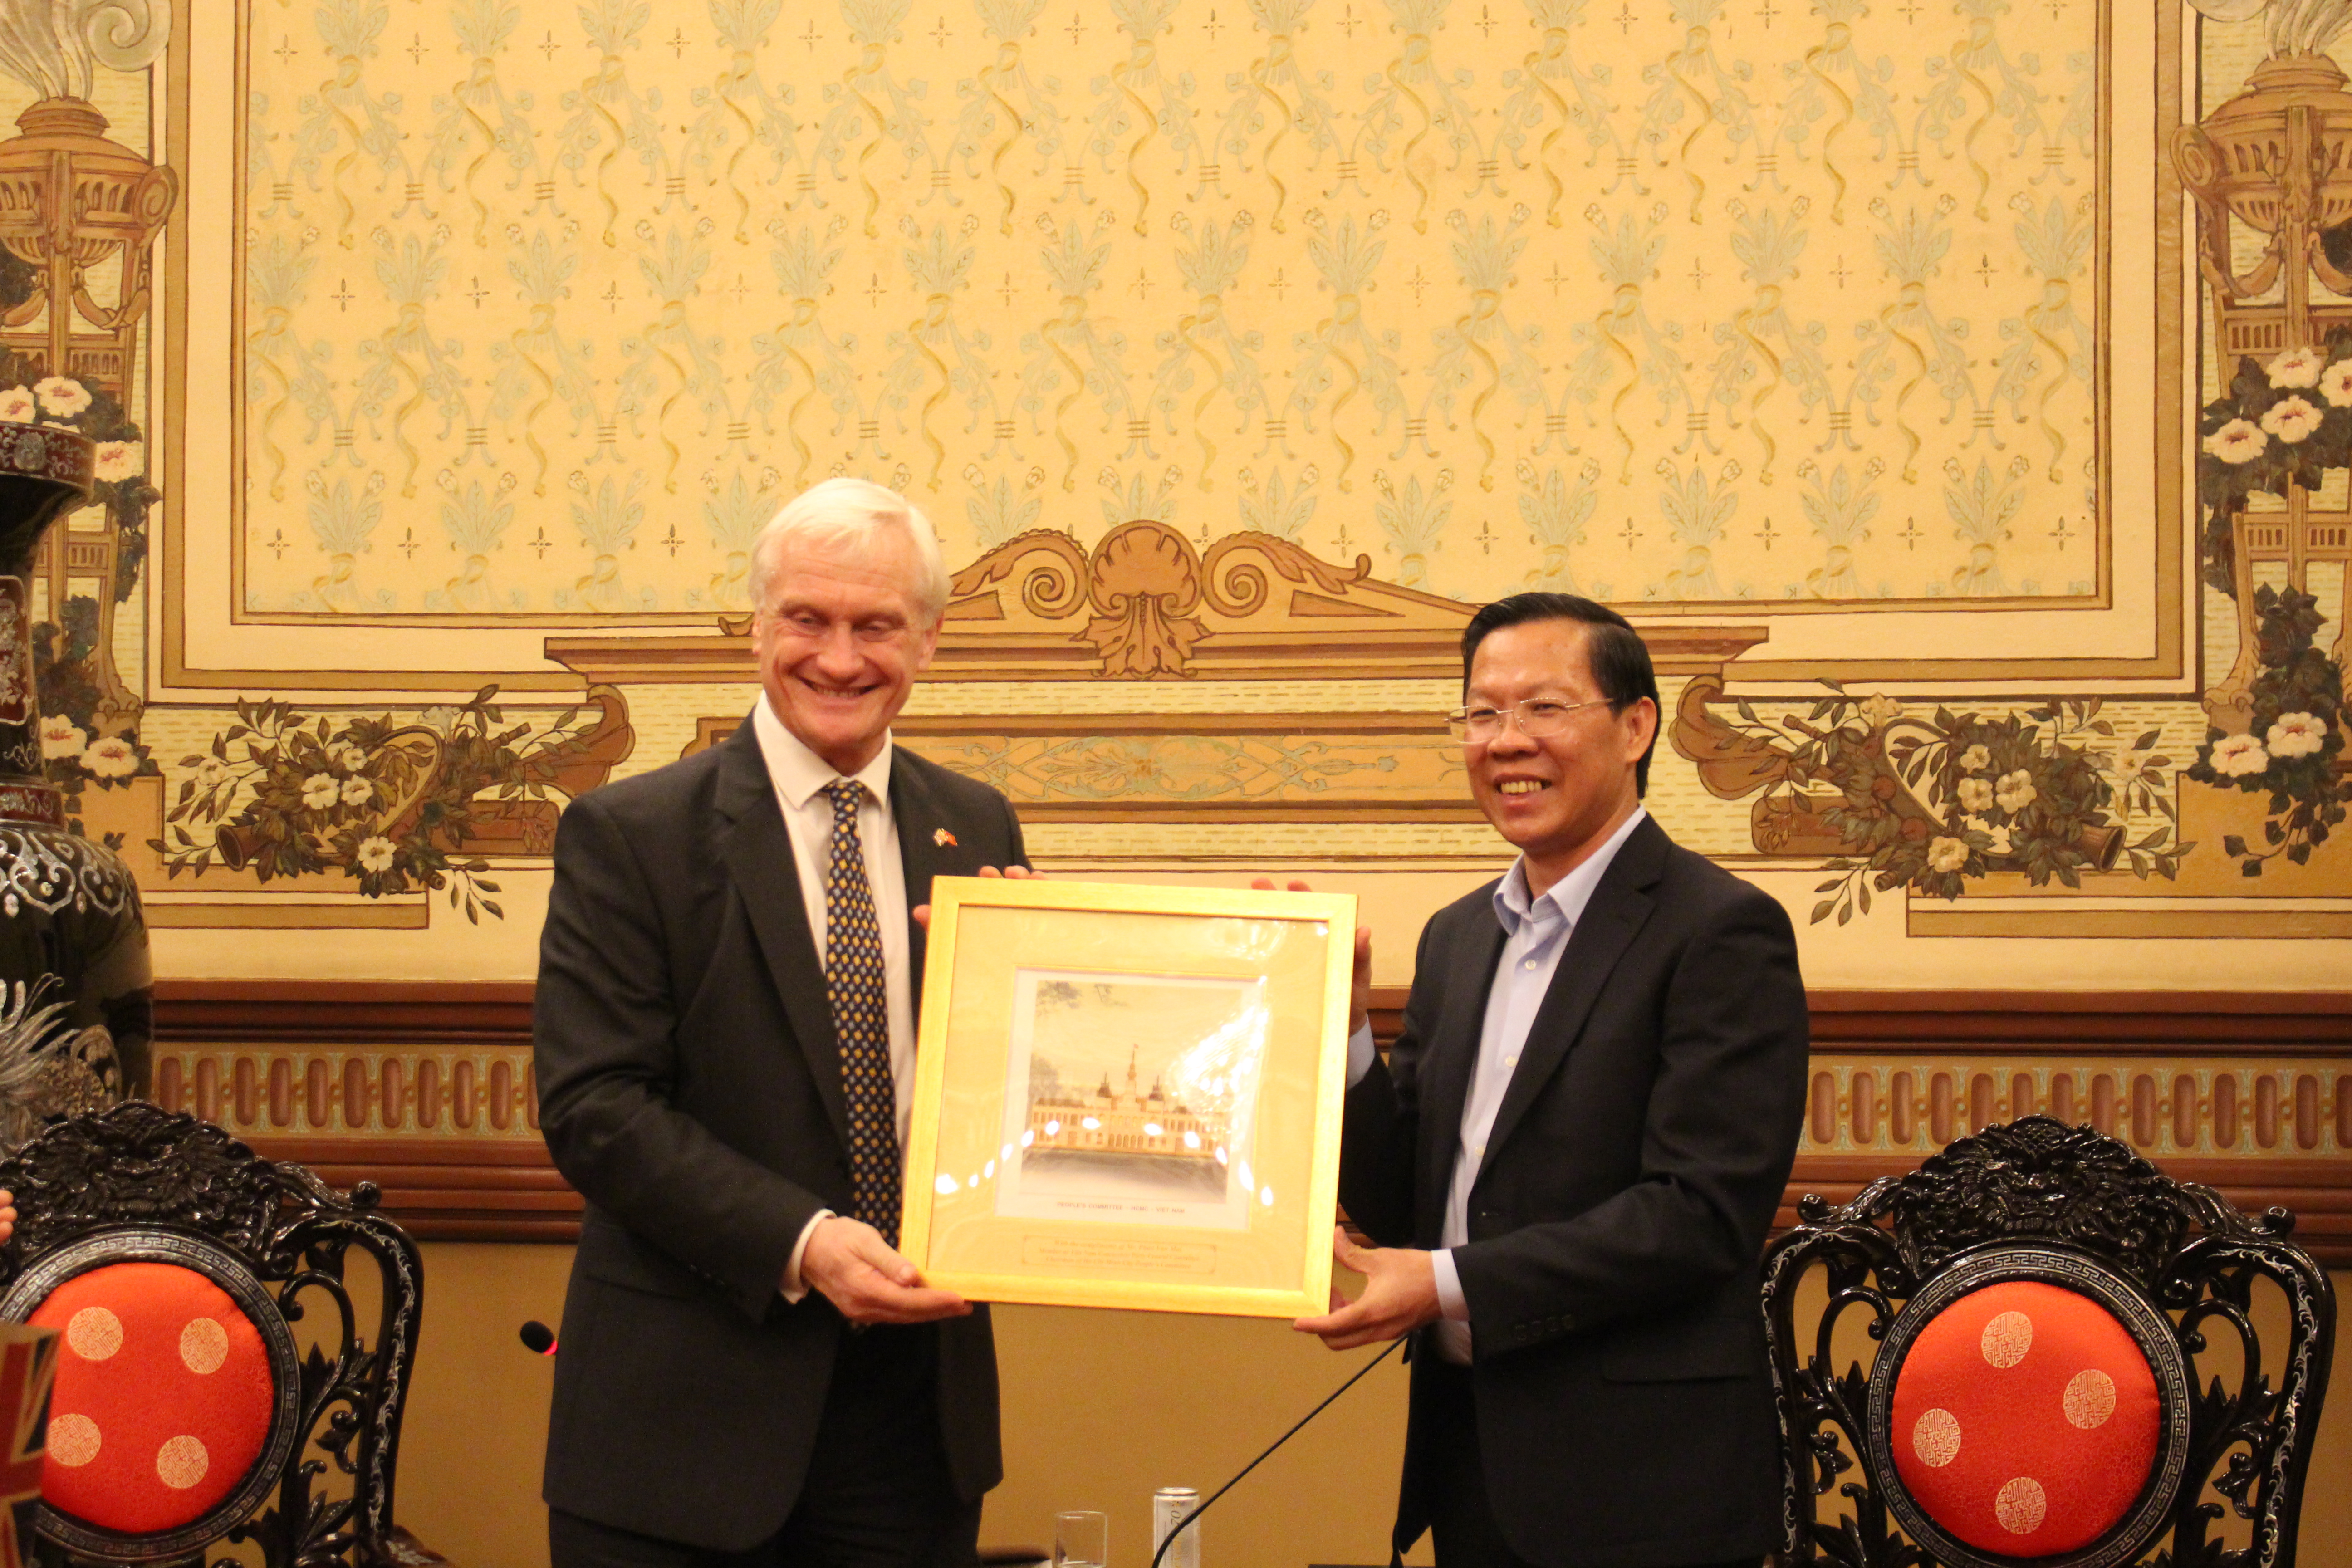 Ho Chi Minh City’s chairman Phan Van Mai presents souvenirs to UK Prime Minister’s Trade Envoy Graham Stuart. Photo: British Embassy in Hanoi